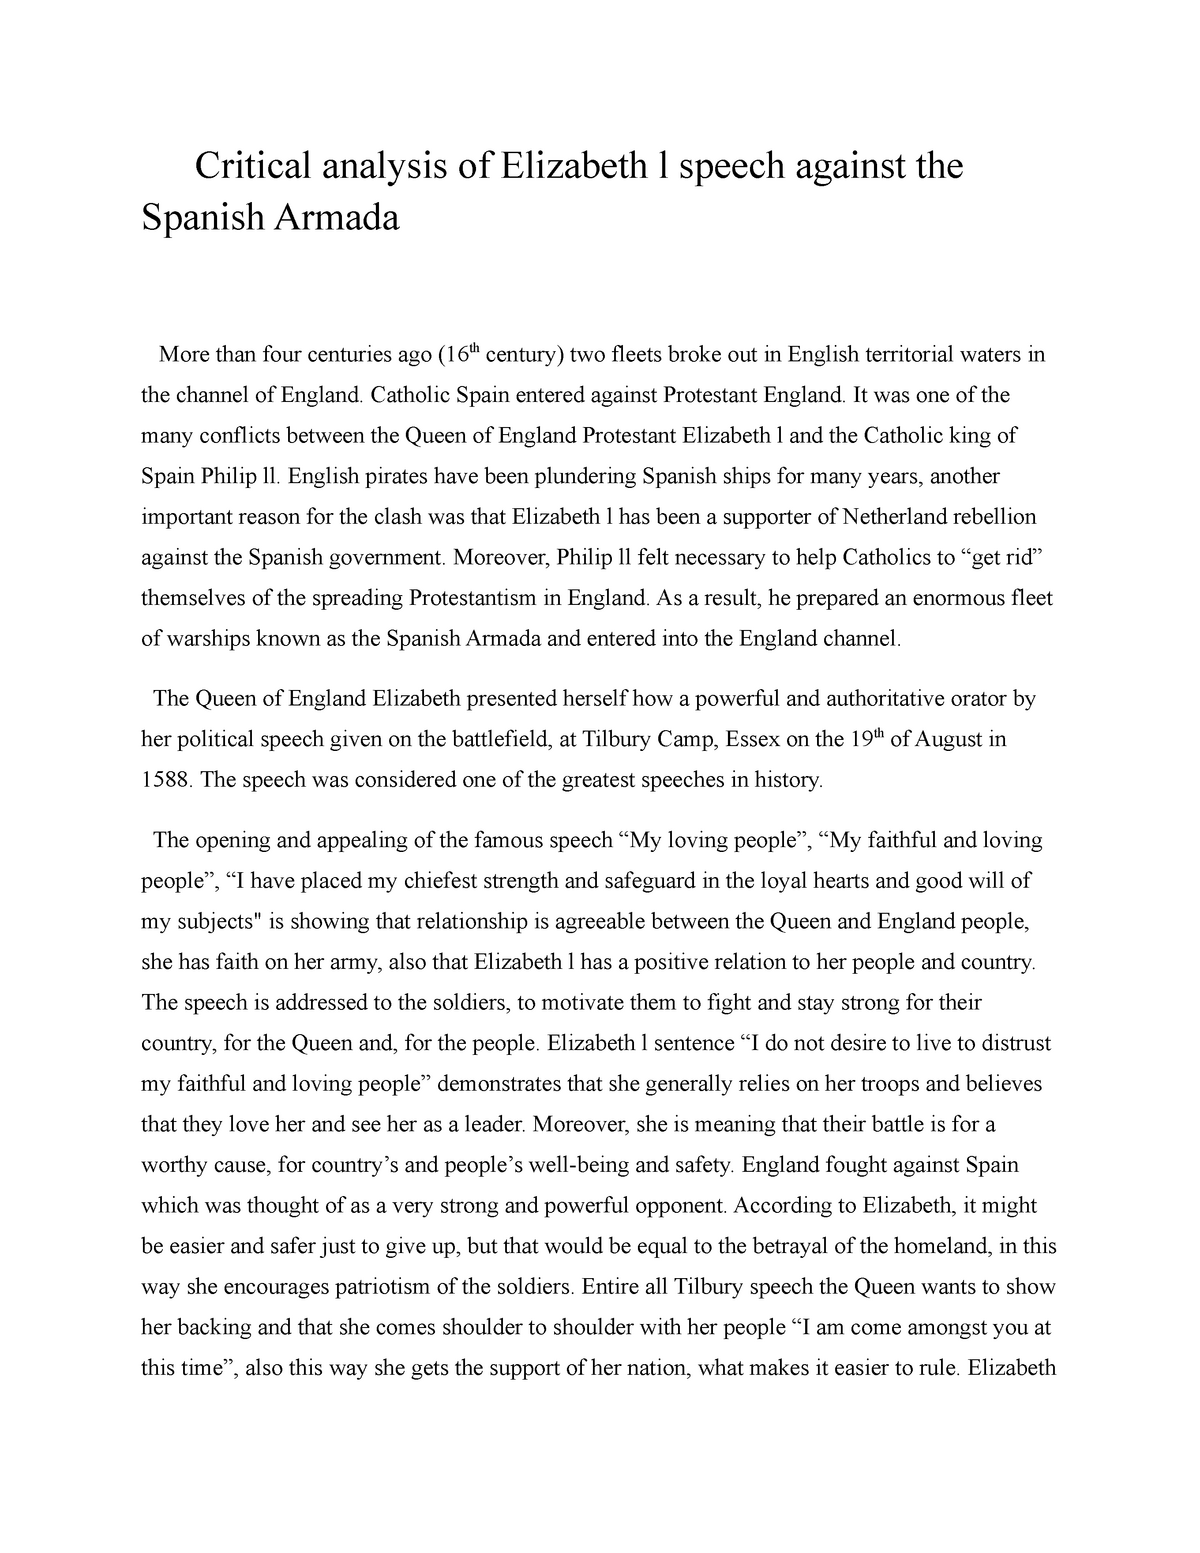 queen elizabeth spanish armada speech